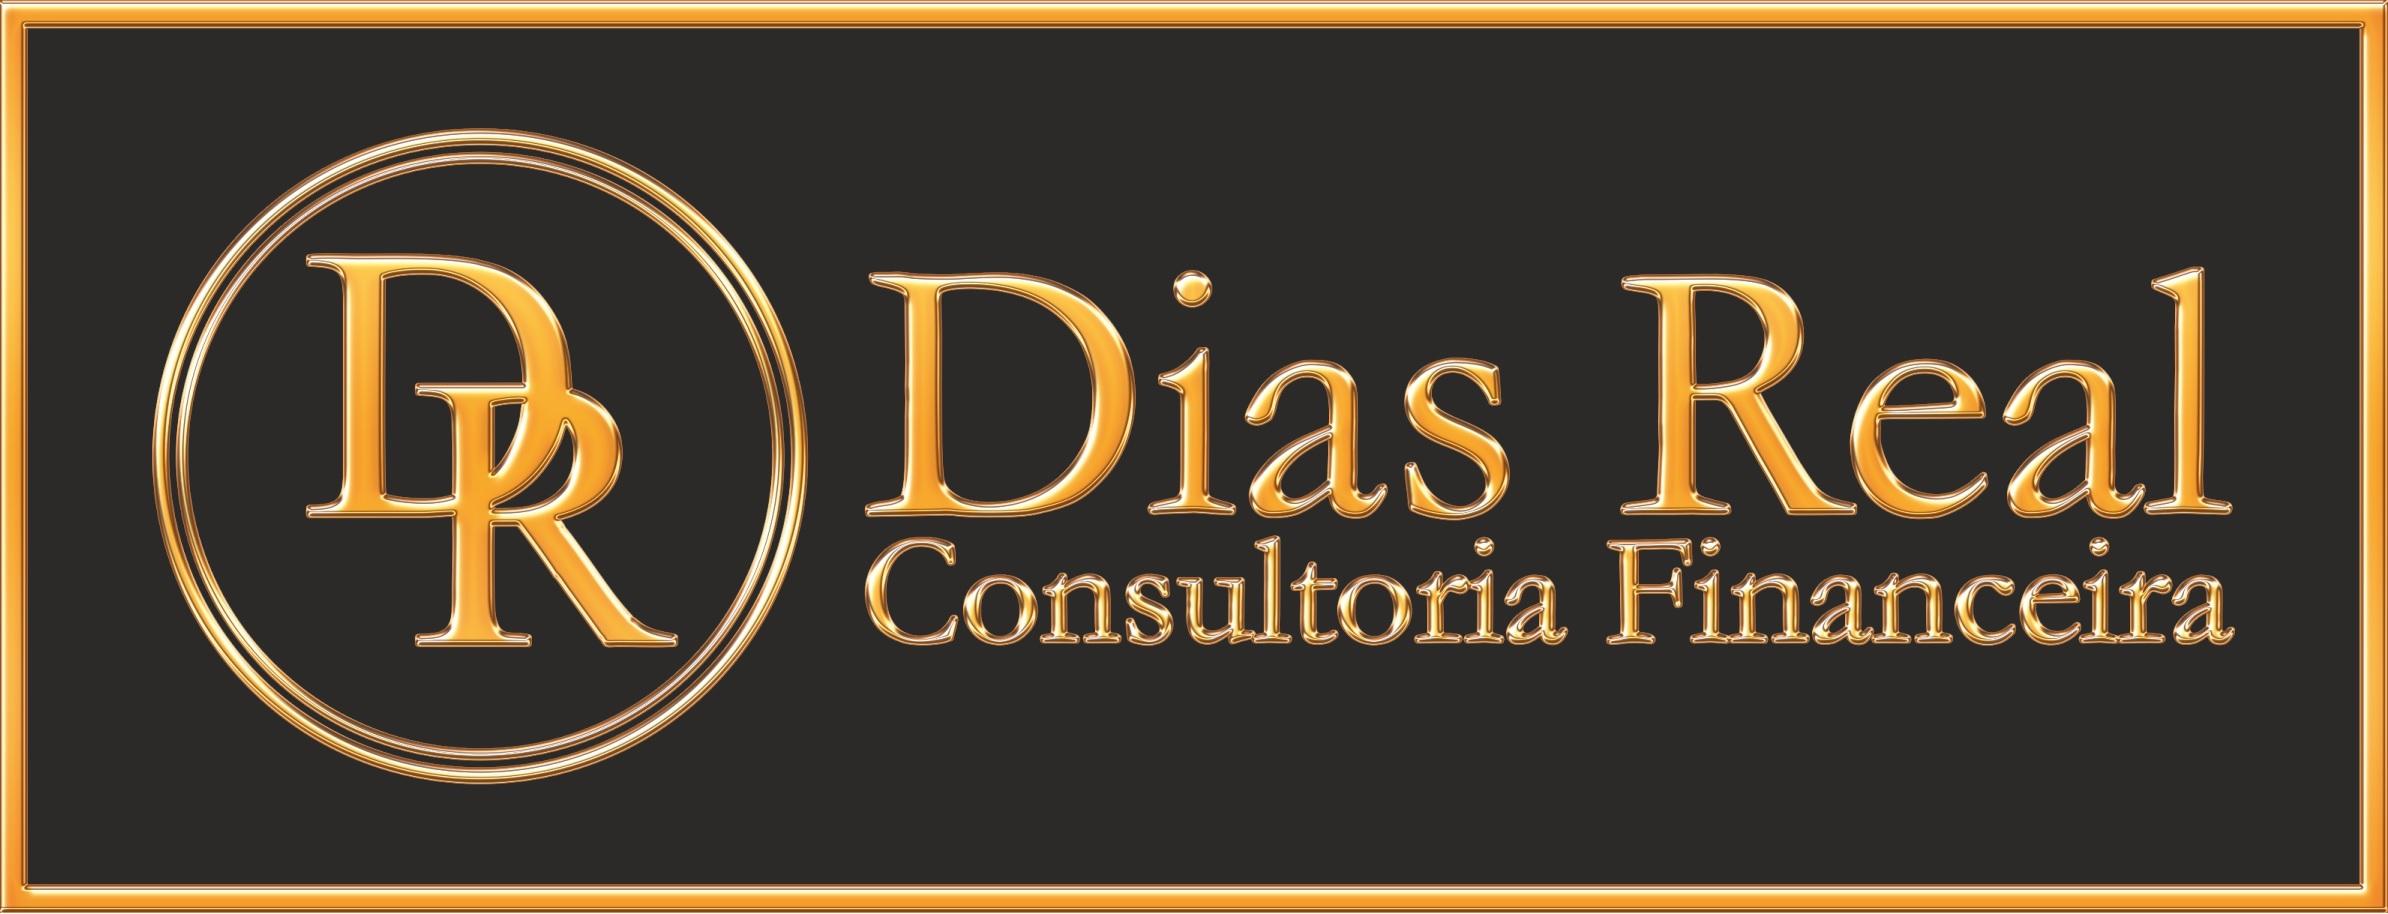 Dias Real Consultoria Financeira e Patrimonial